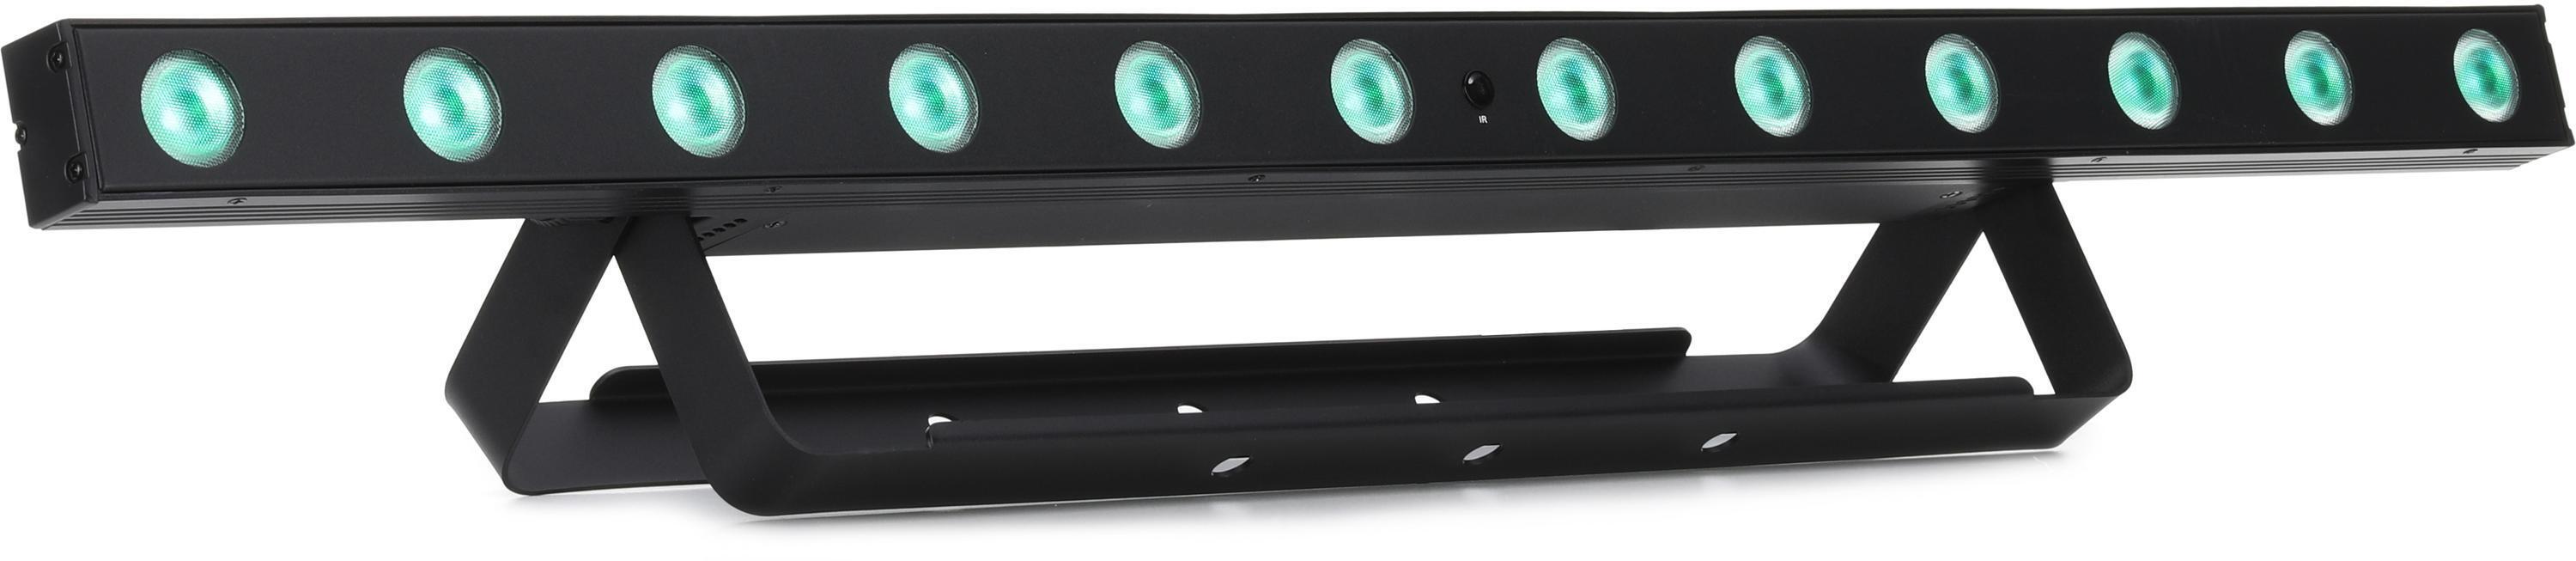 Chauvet DJ EZLINK STRIP Q6 BT Six Quad-Color (RGBA) LED Lighting